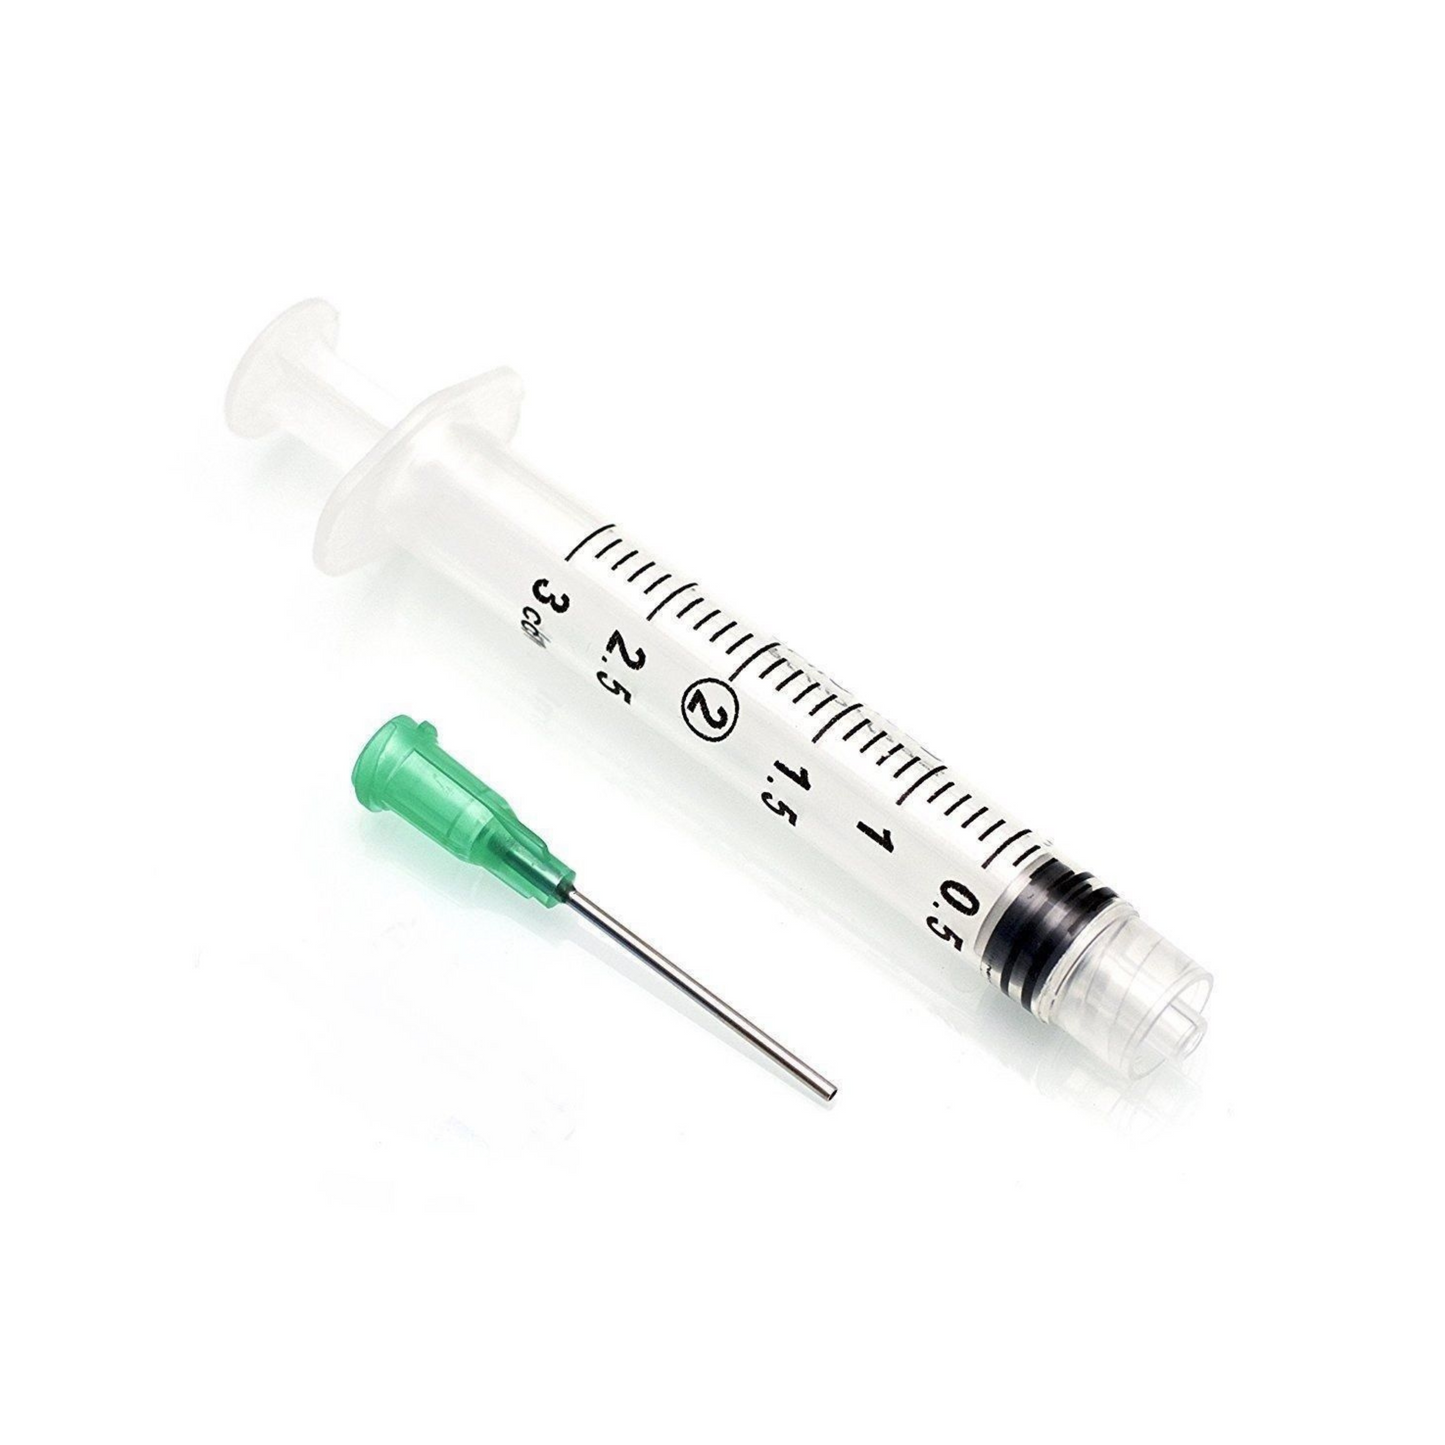 Single  (3) ml Luer Lock Syringe plus needle